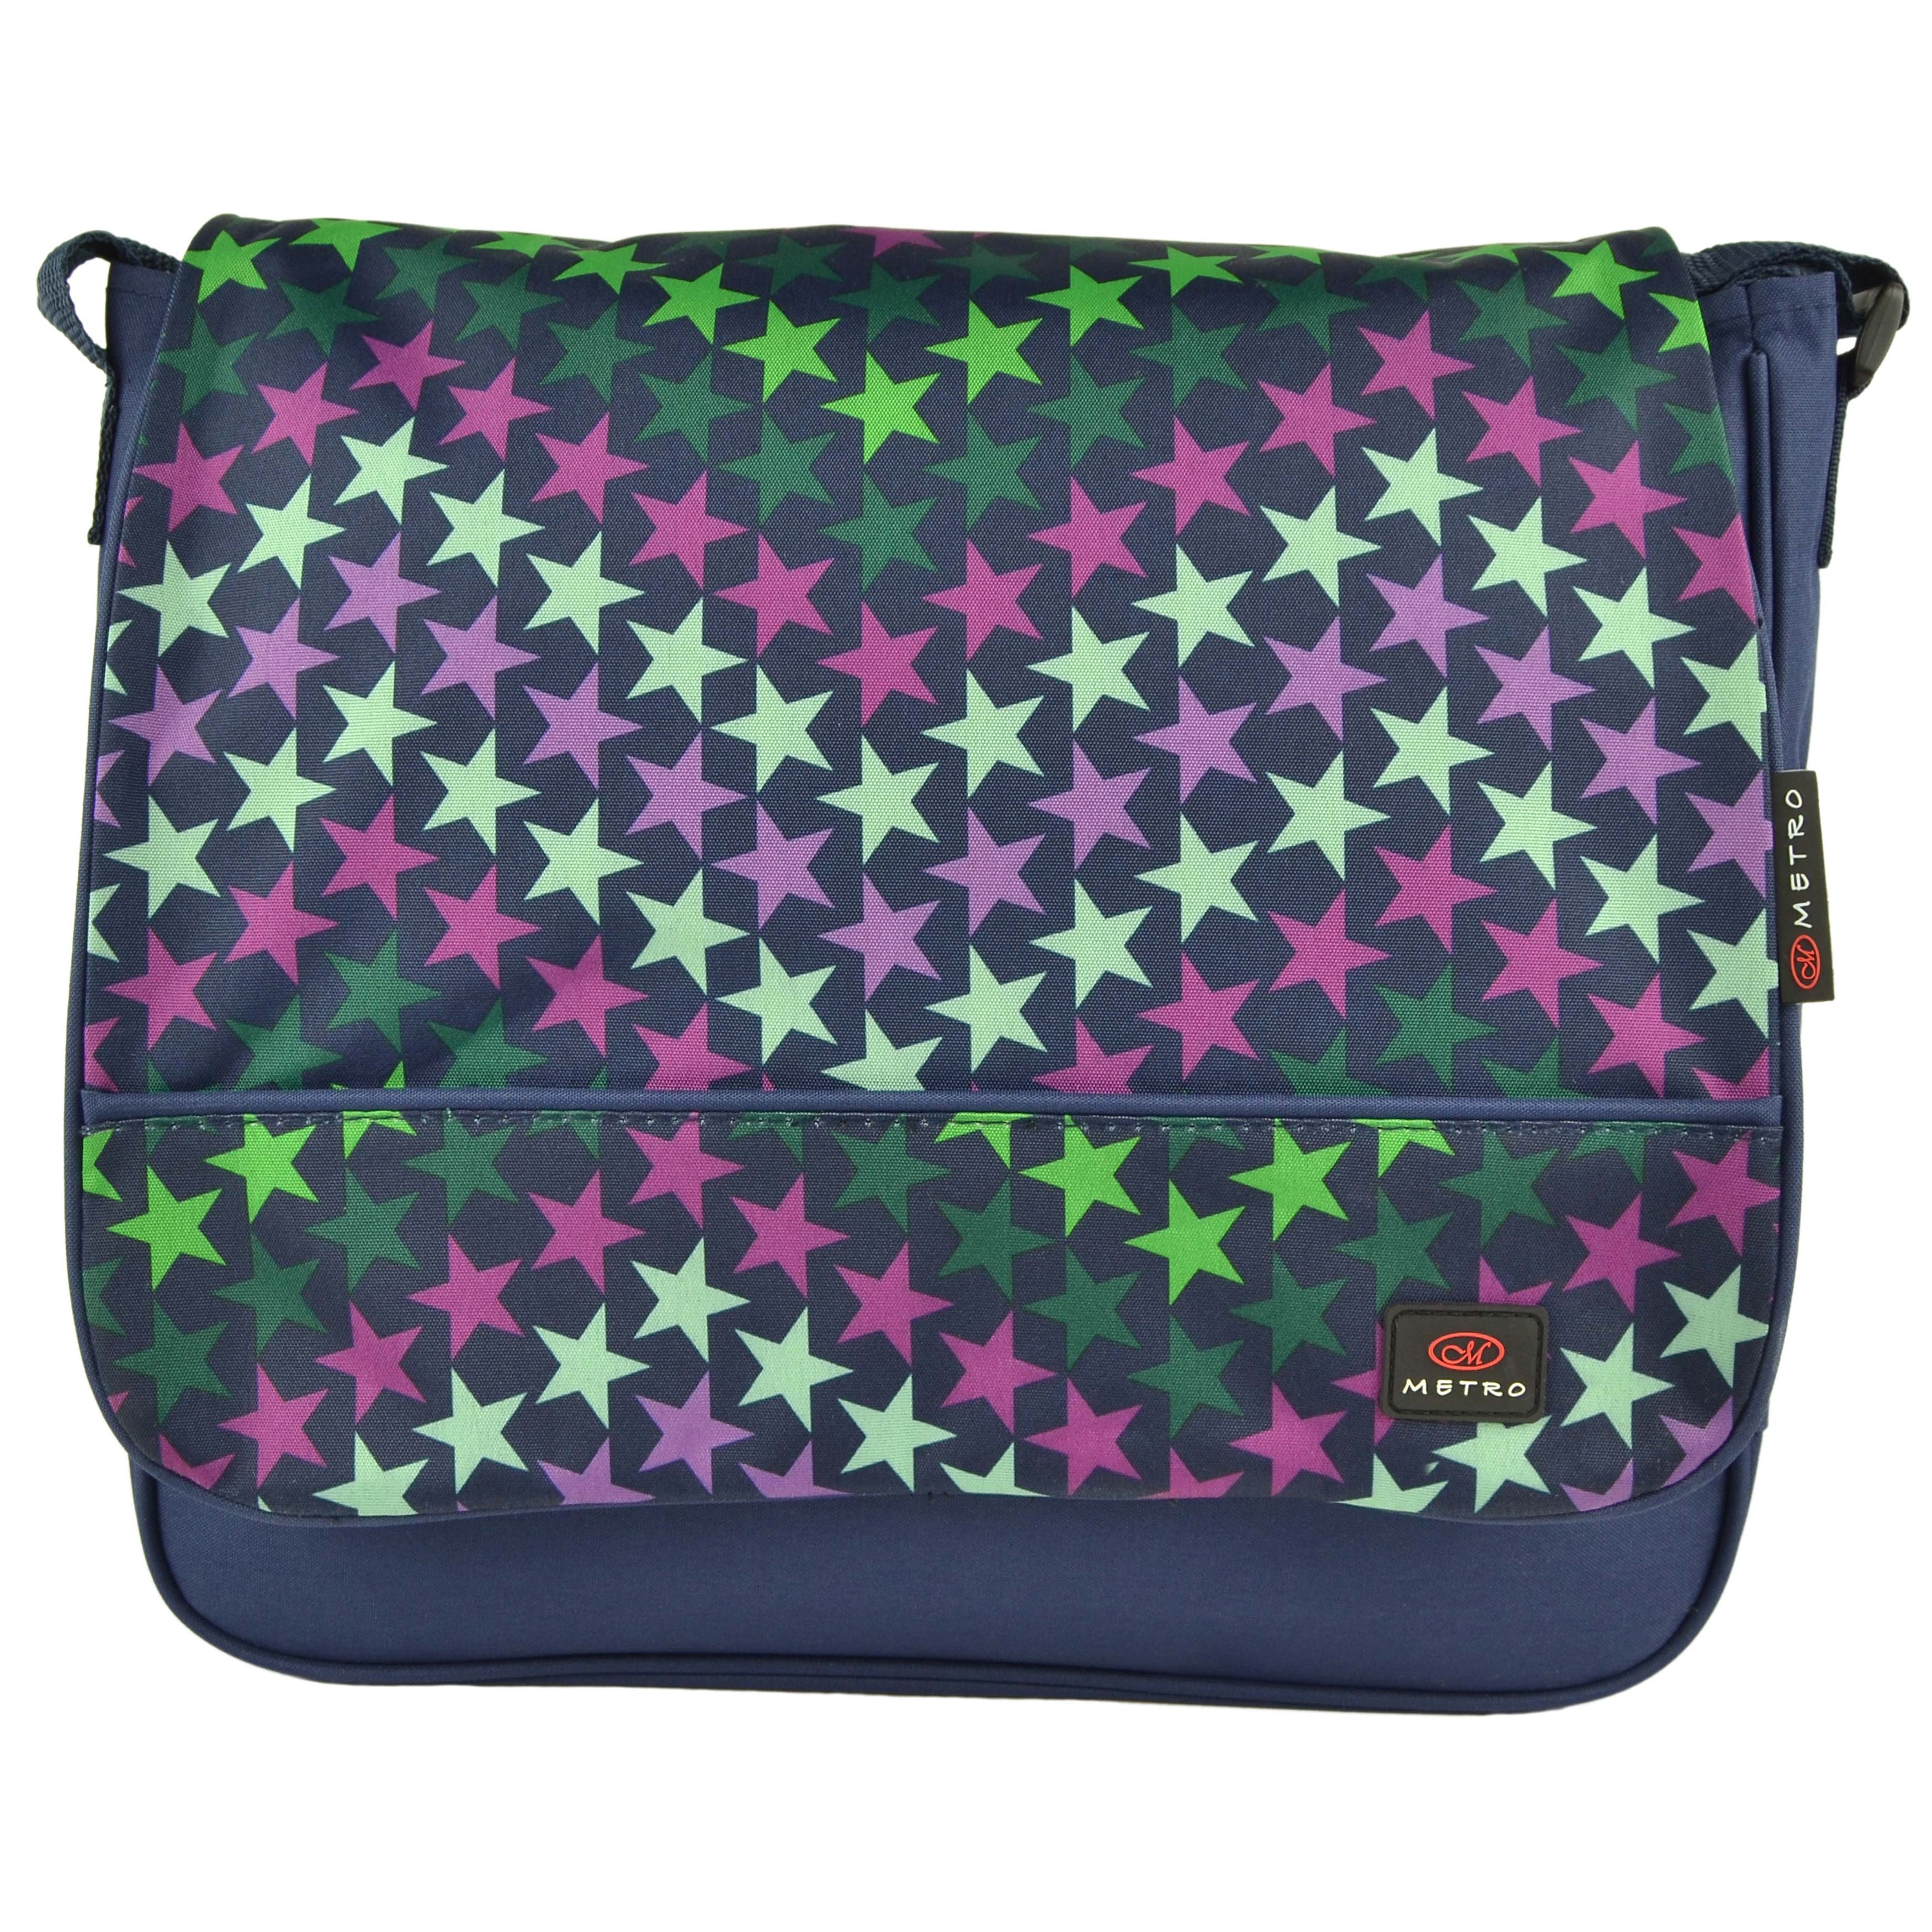 Lightweight Stars Design Canvas Messenger Bag by METRO Cross Body Shoulder  Un | eBay